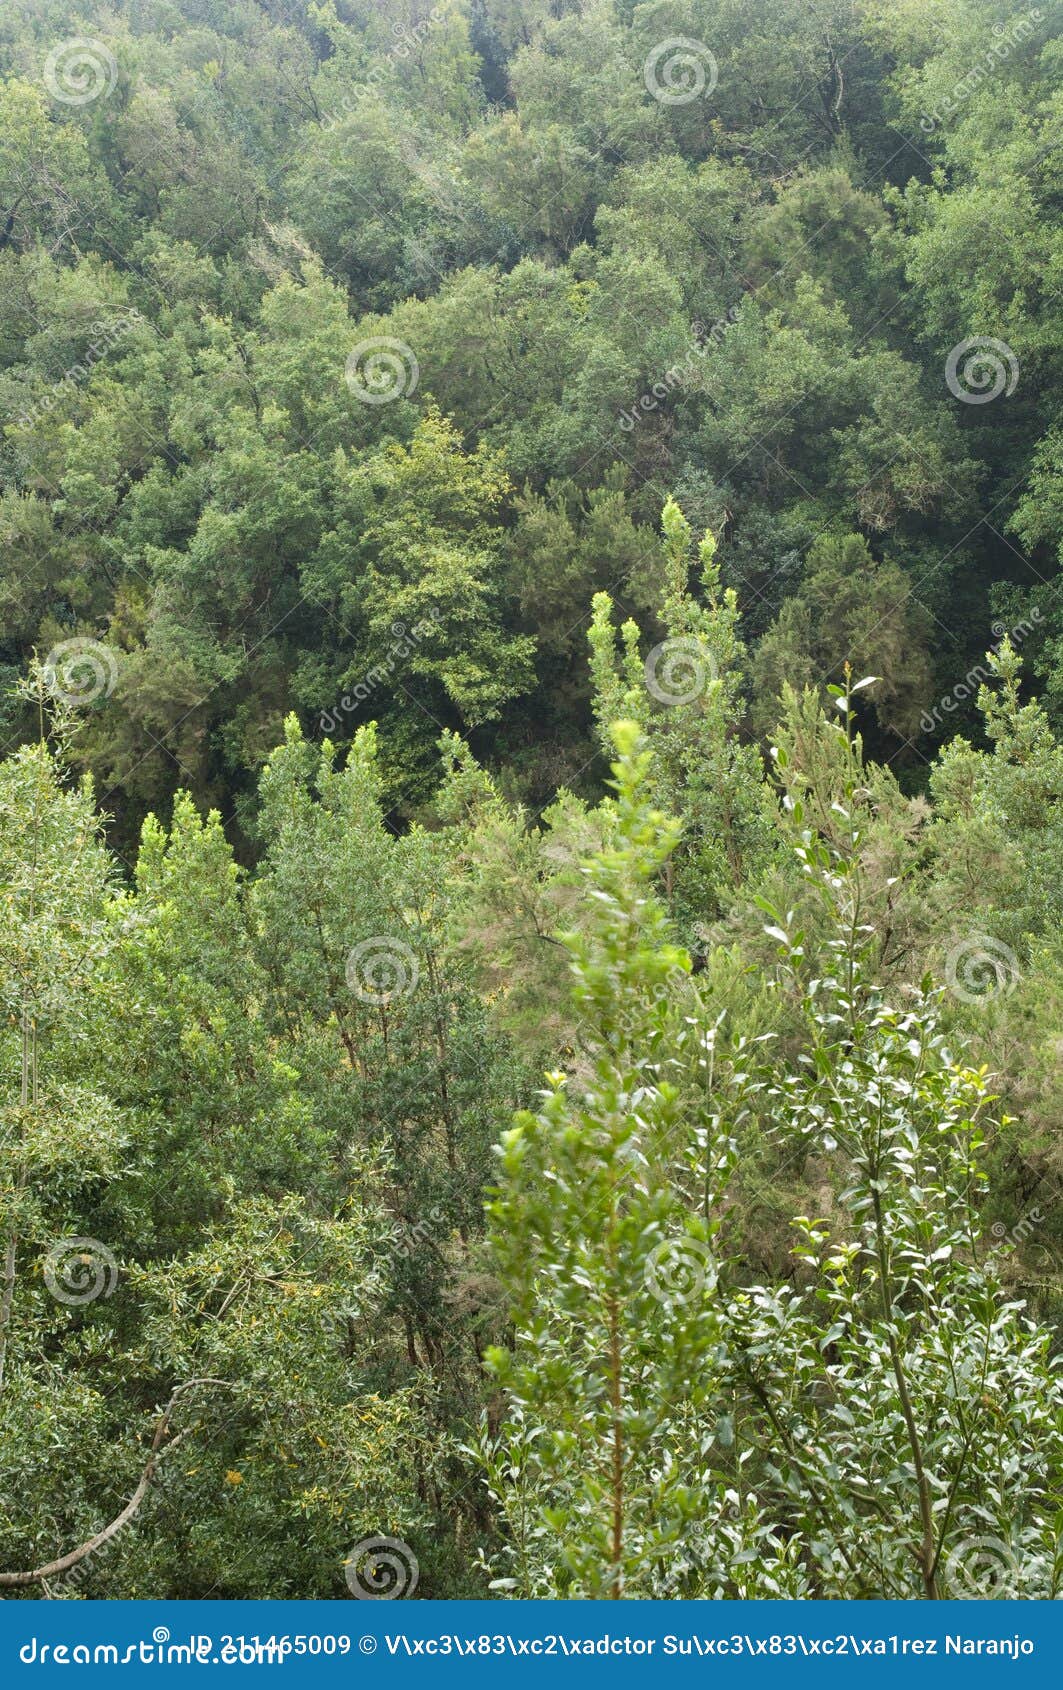 evergreen forest in barlovento.